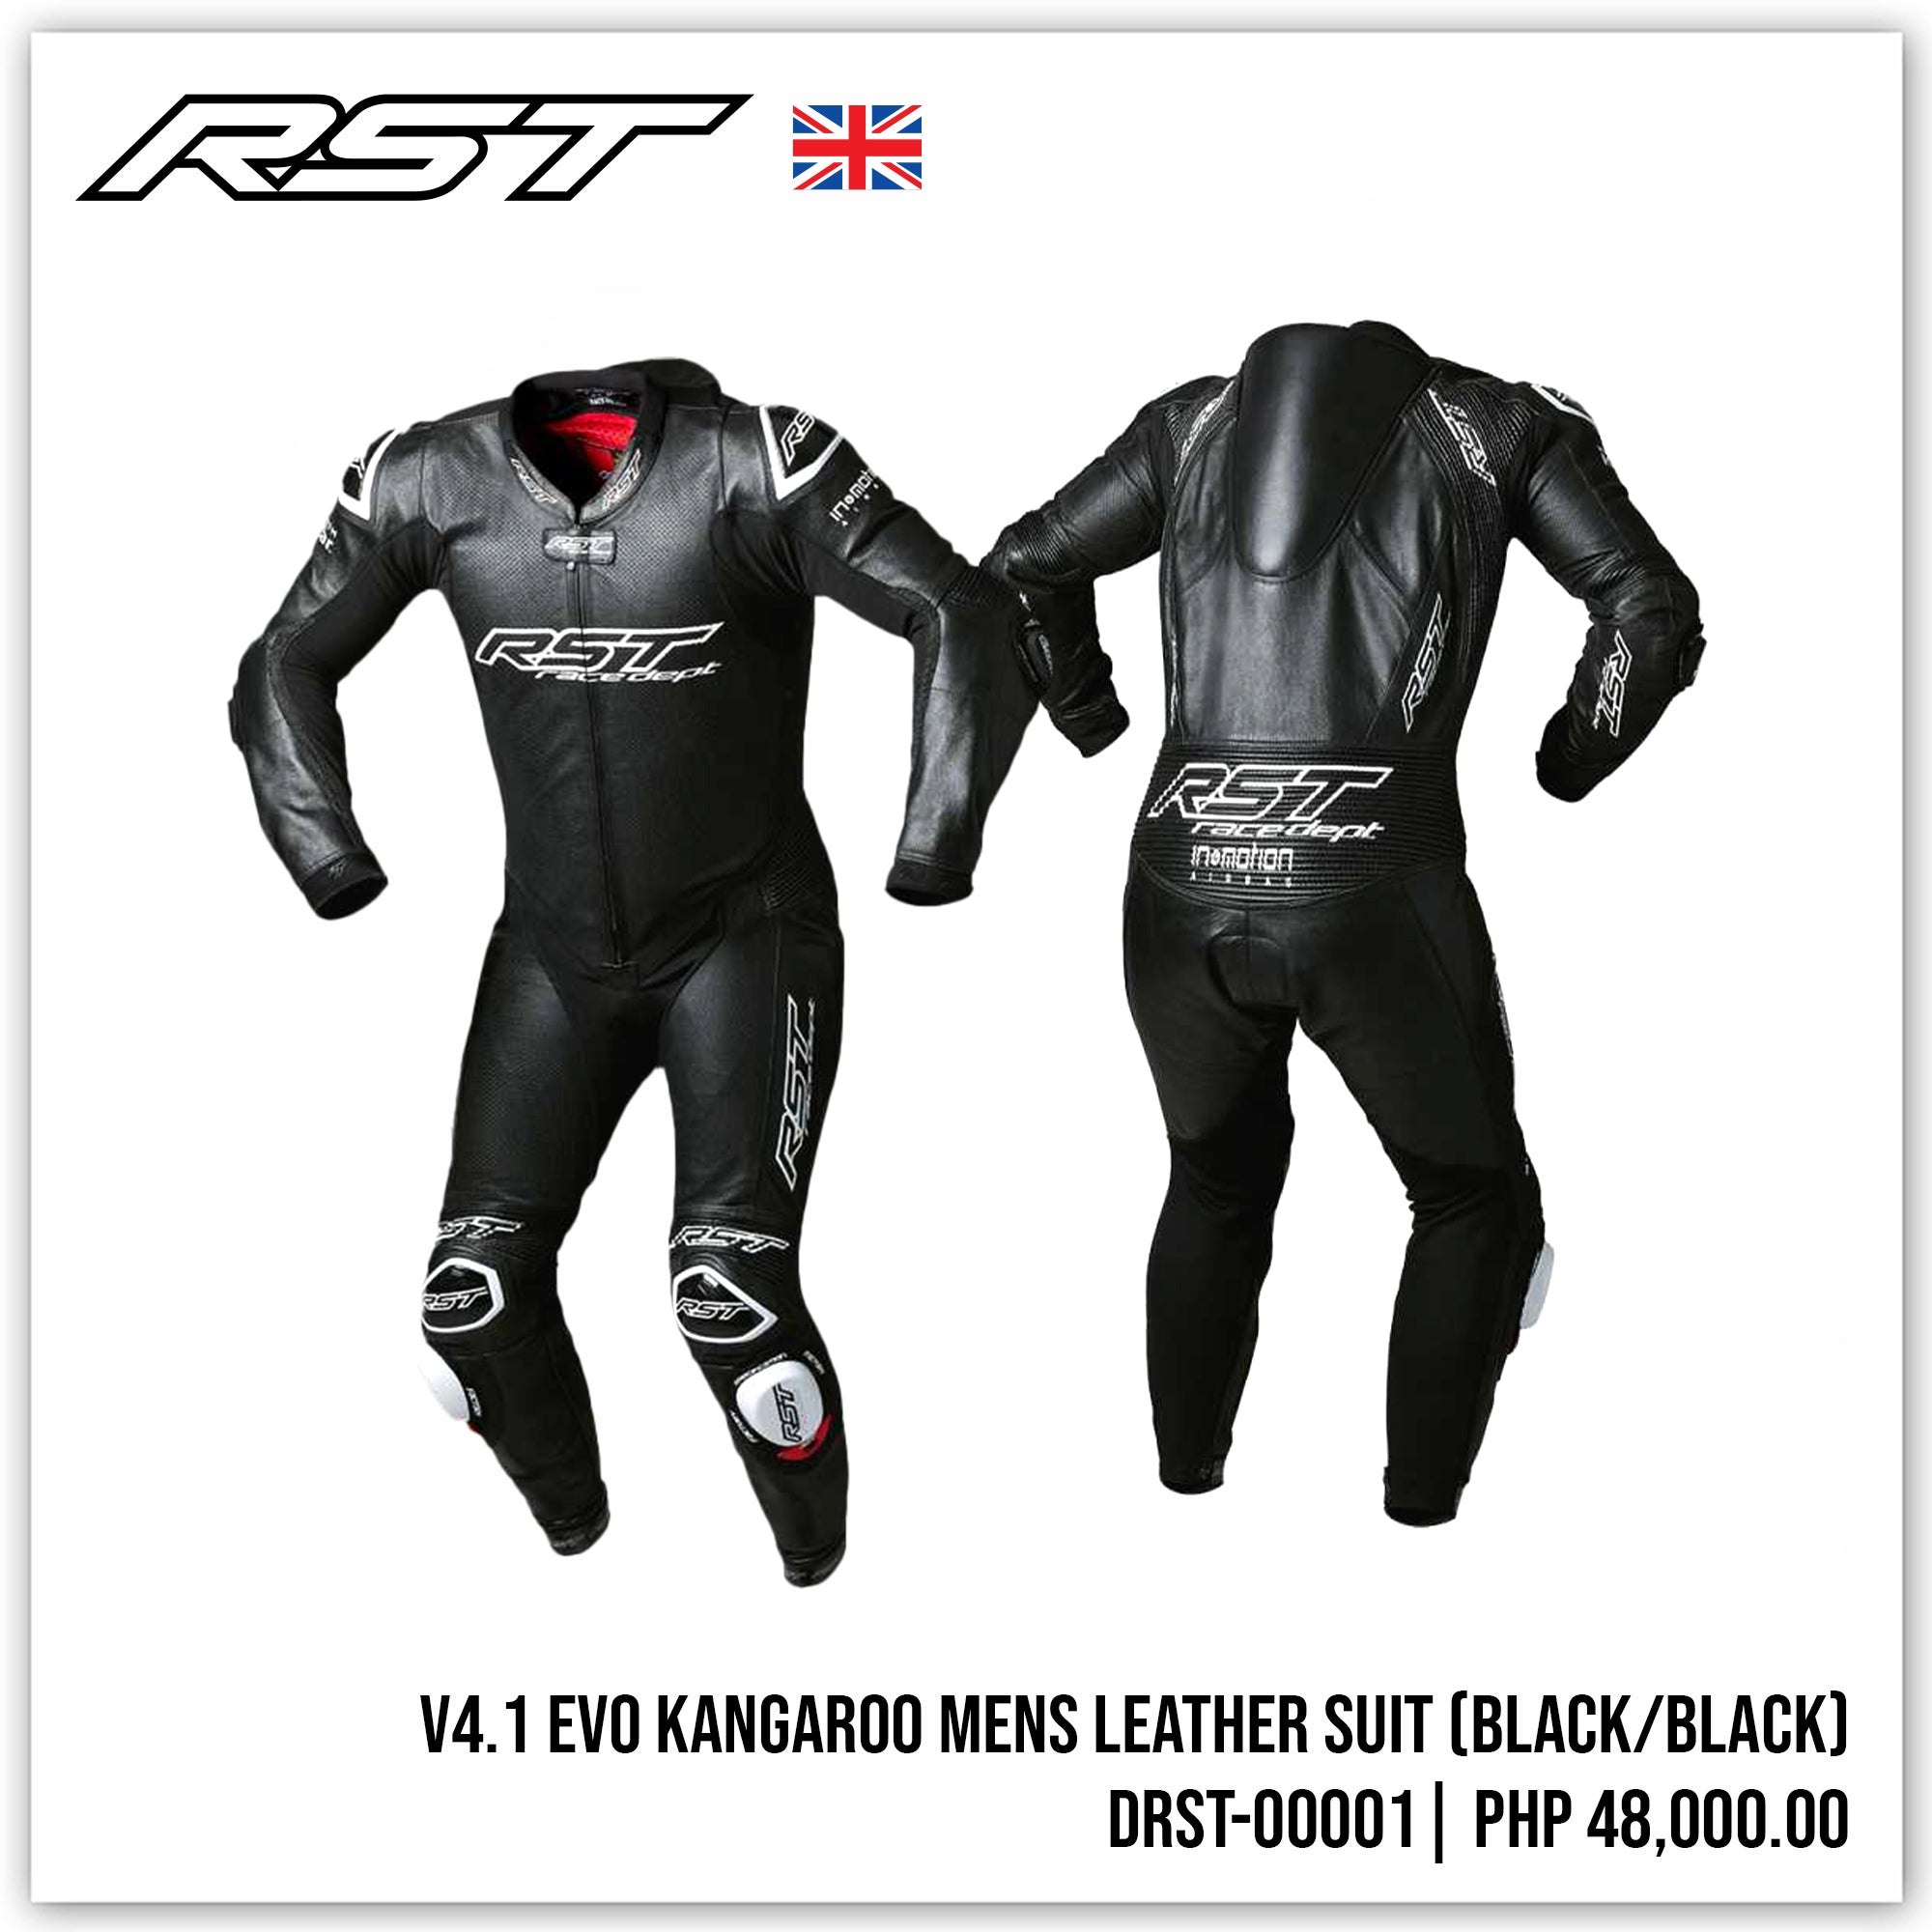 V4.1 Evo Kangaroo Mens Leather Suit (Black / Black)